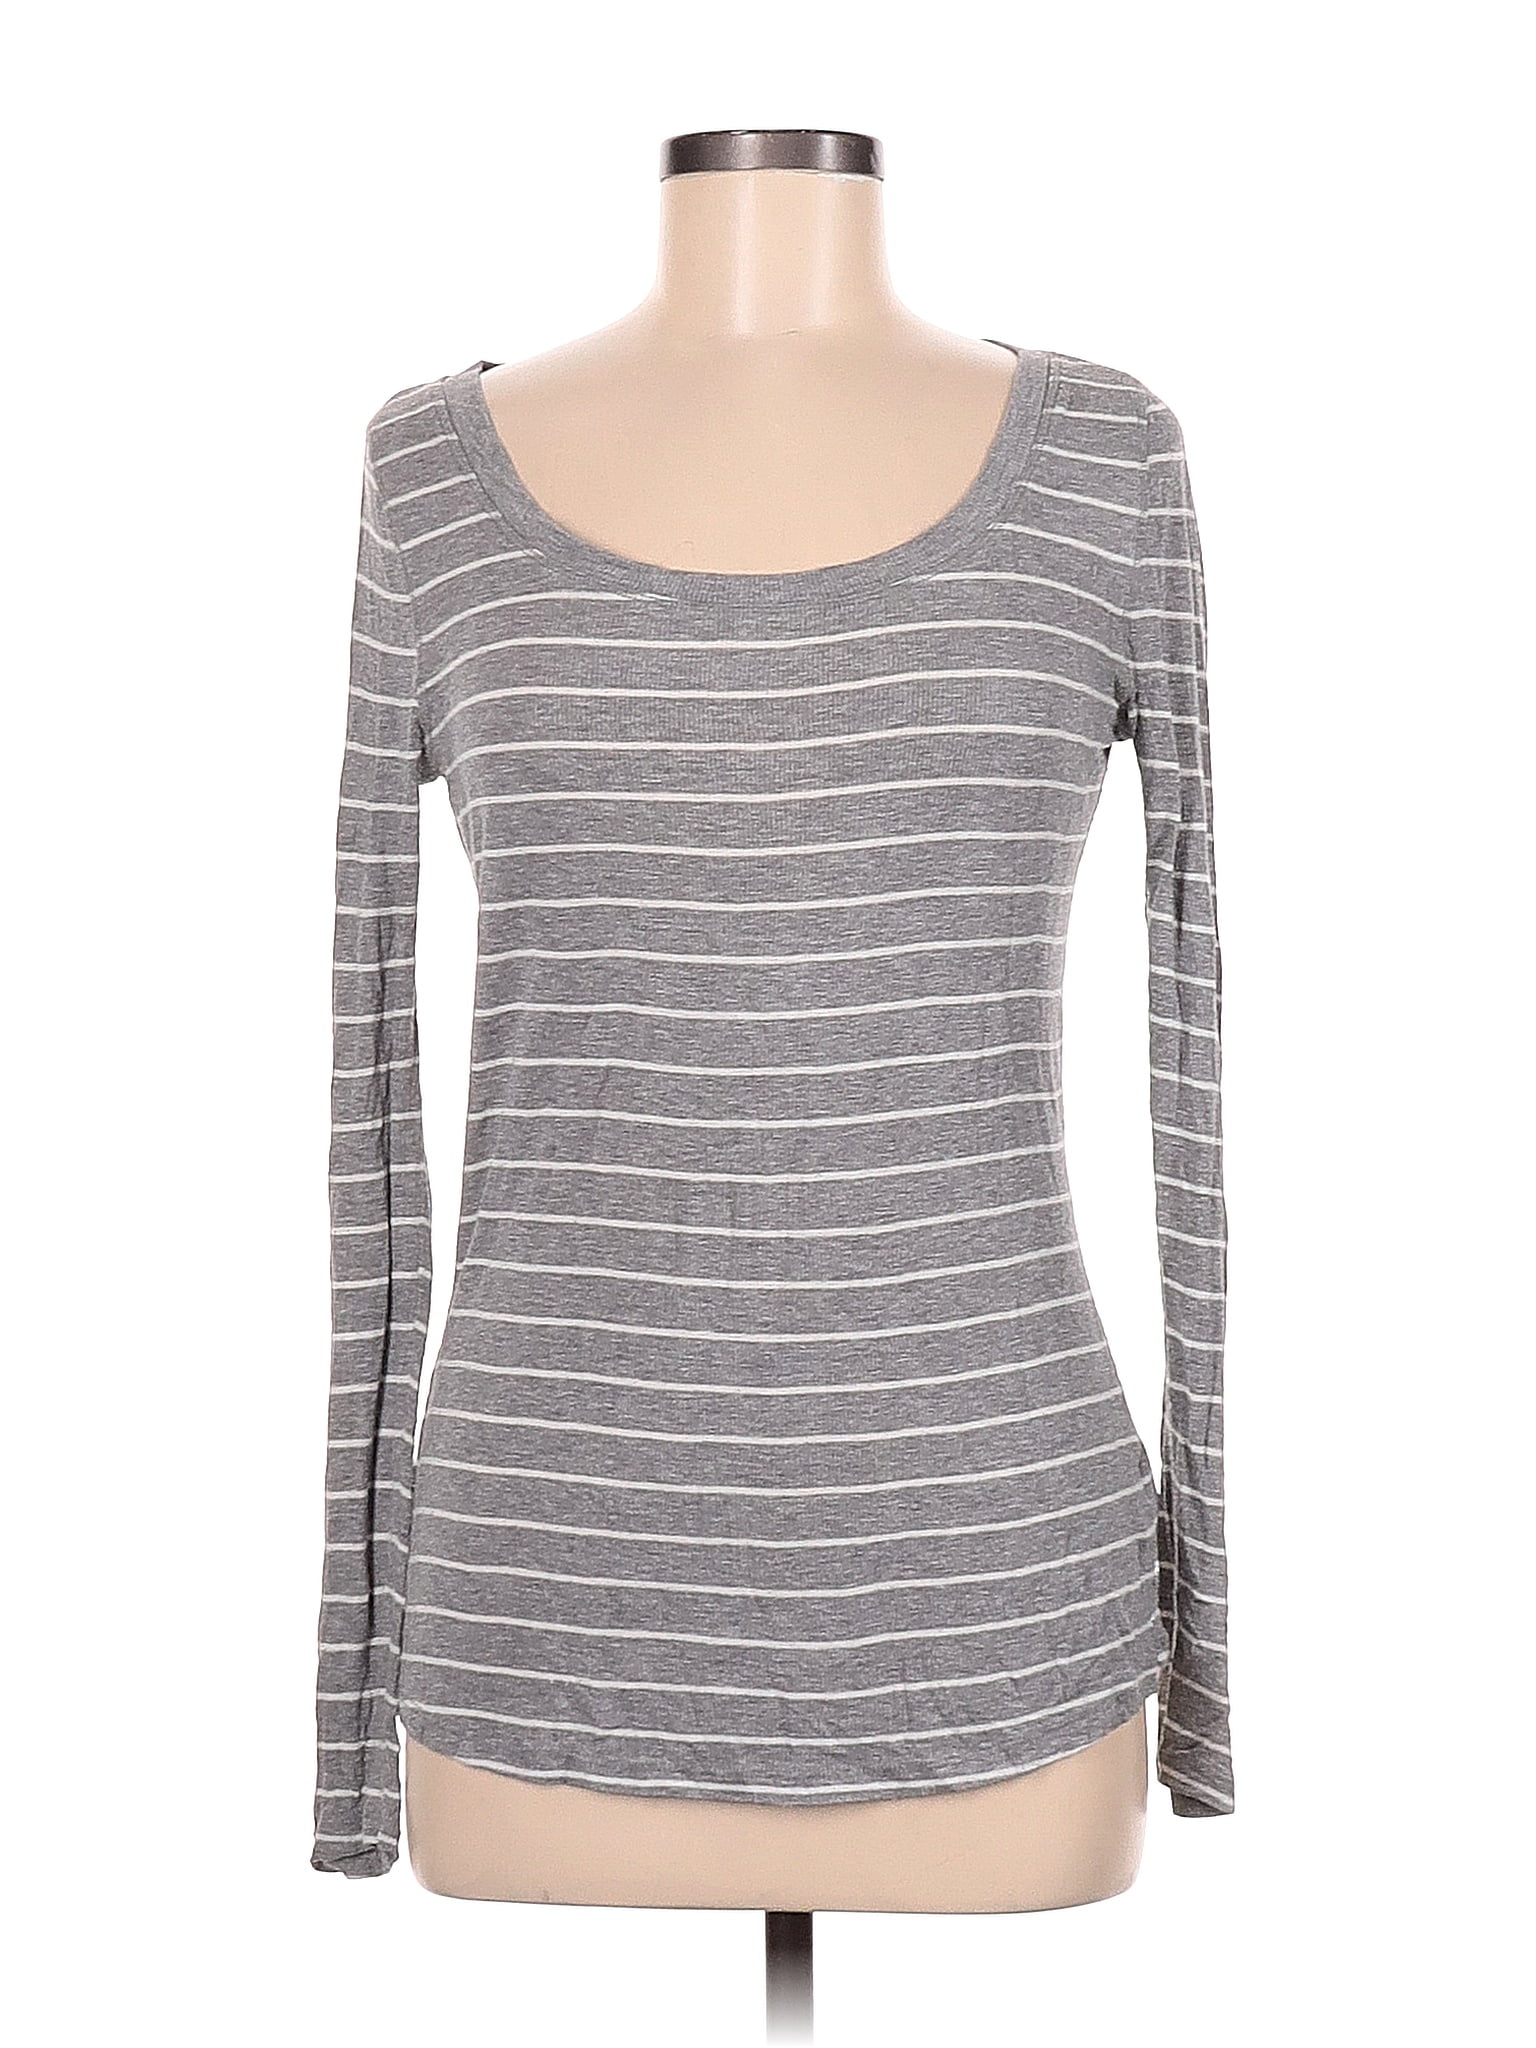 BCBG Paris Gray Long Sleeve T-Shirt Size M - 48% off | thredUP